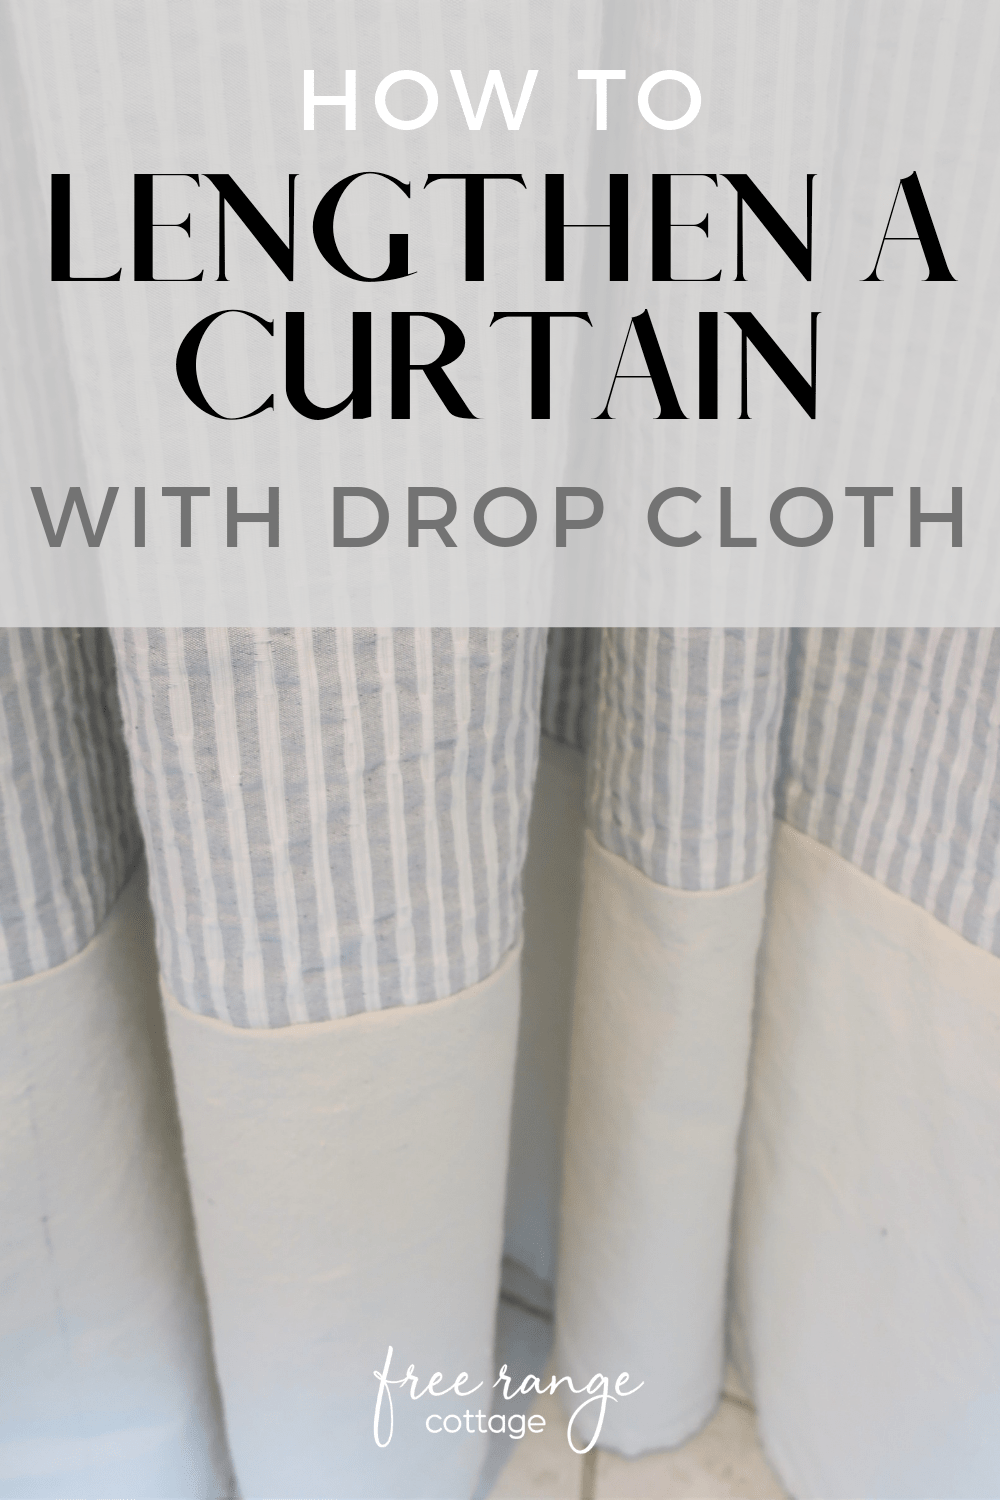 Drop cloth curtain